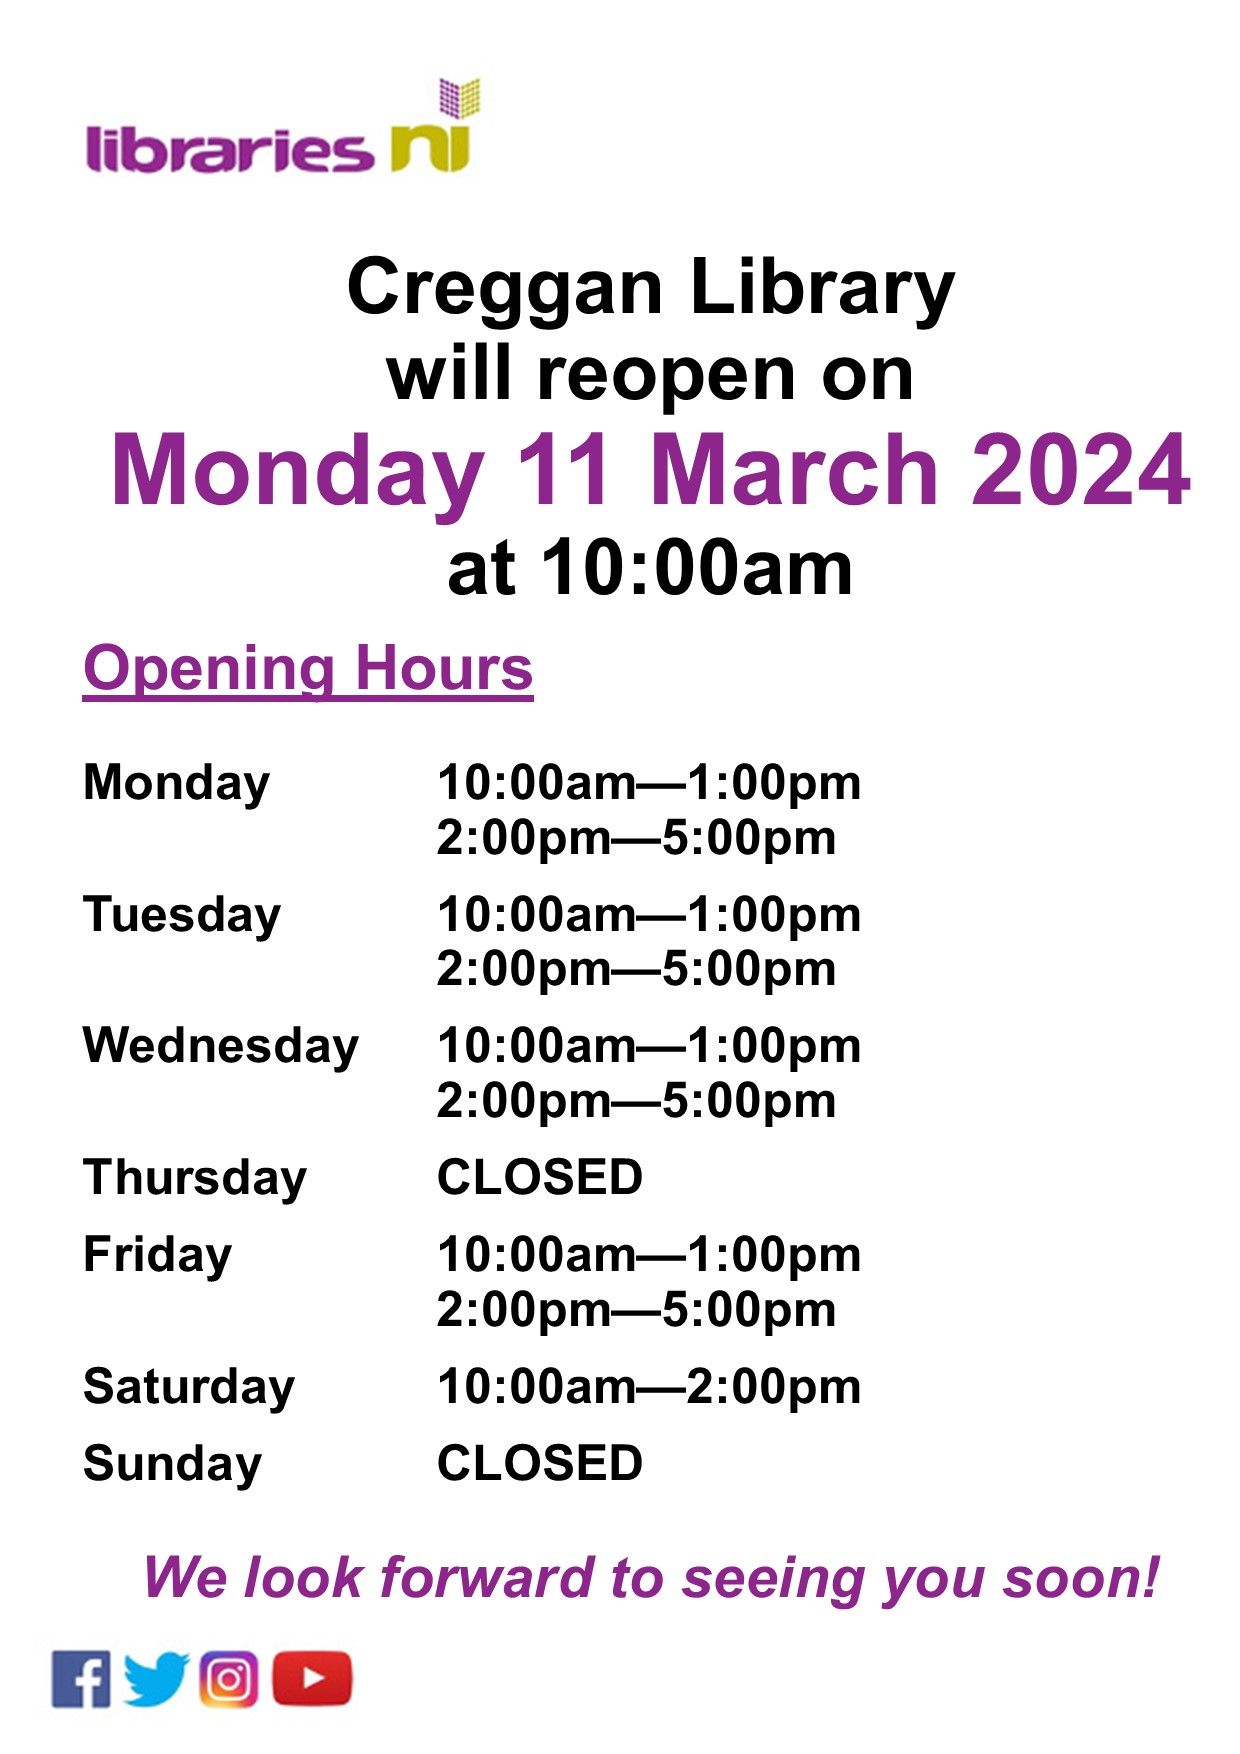 Creggan Library - Reopening Date